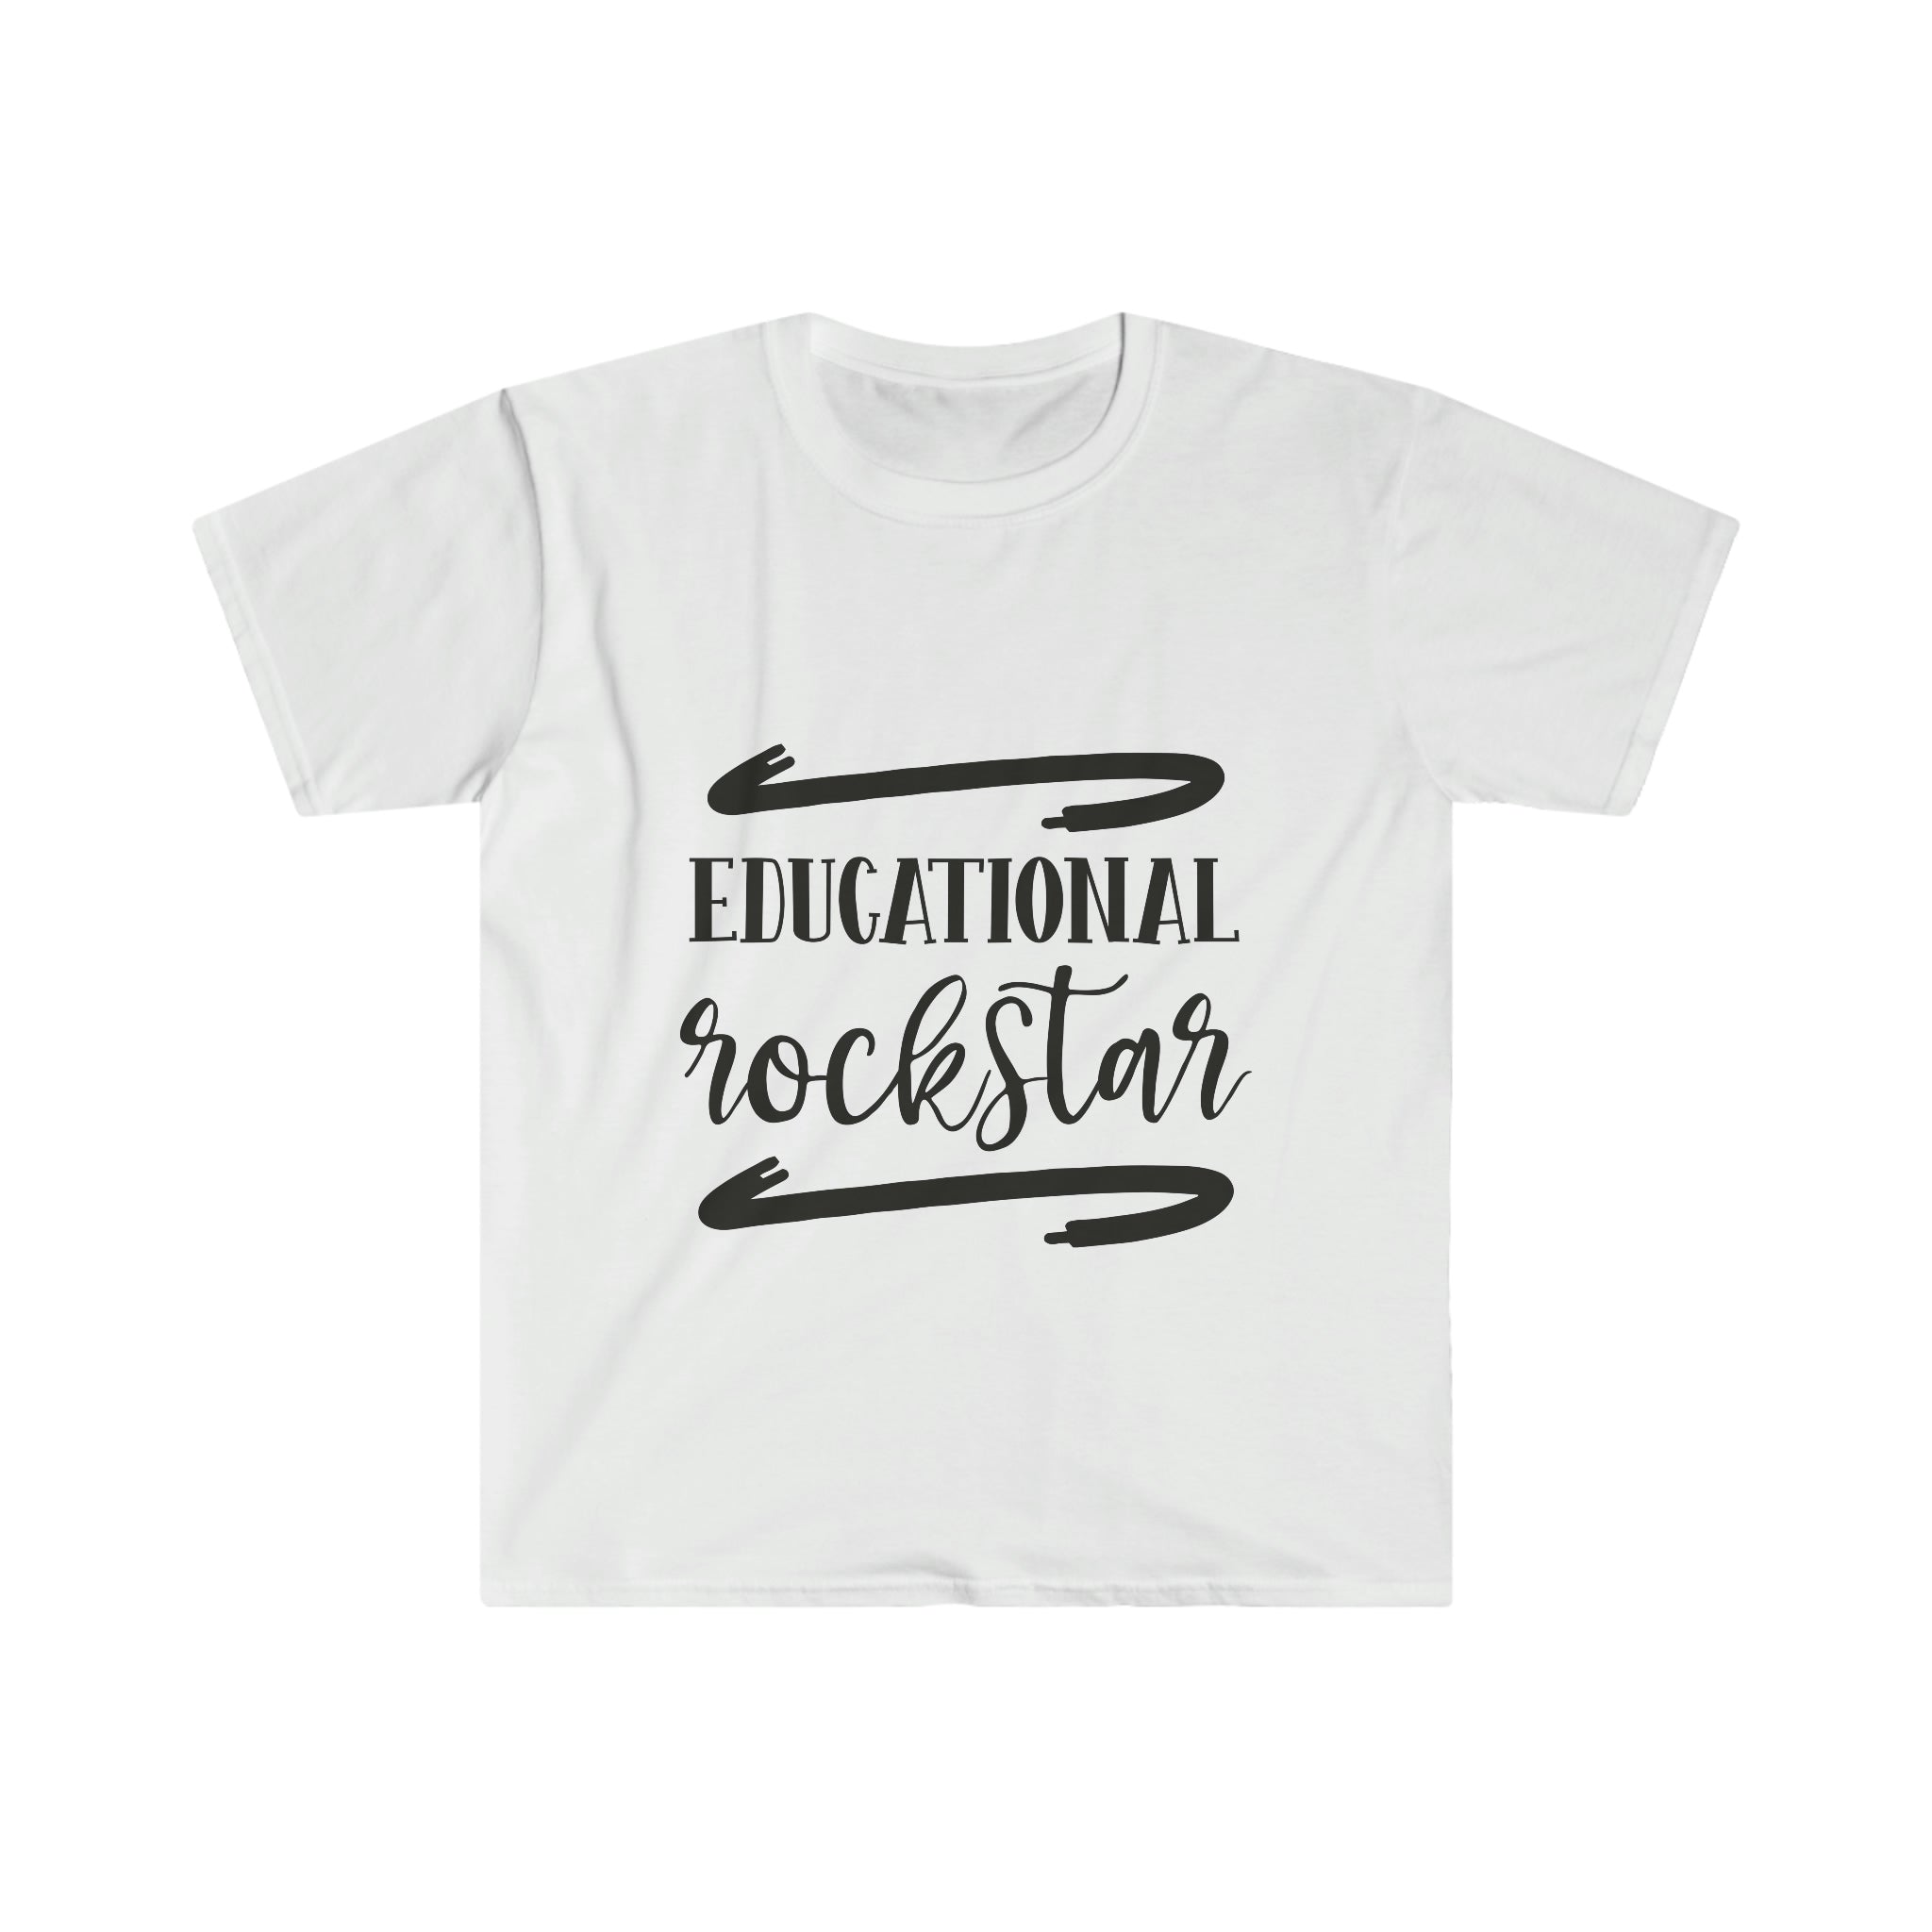 An empowering Educational Rockstar T-Shirt for teachers that proudly declares them an "Educational Rockstar.